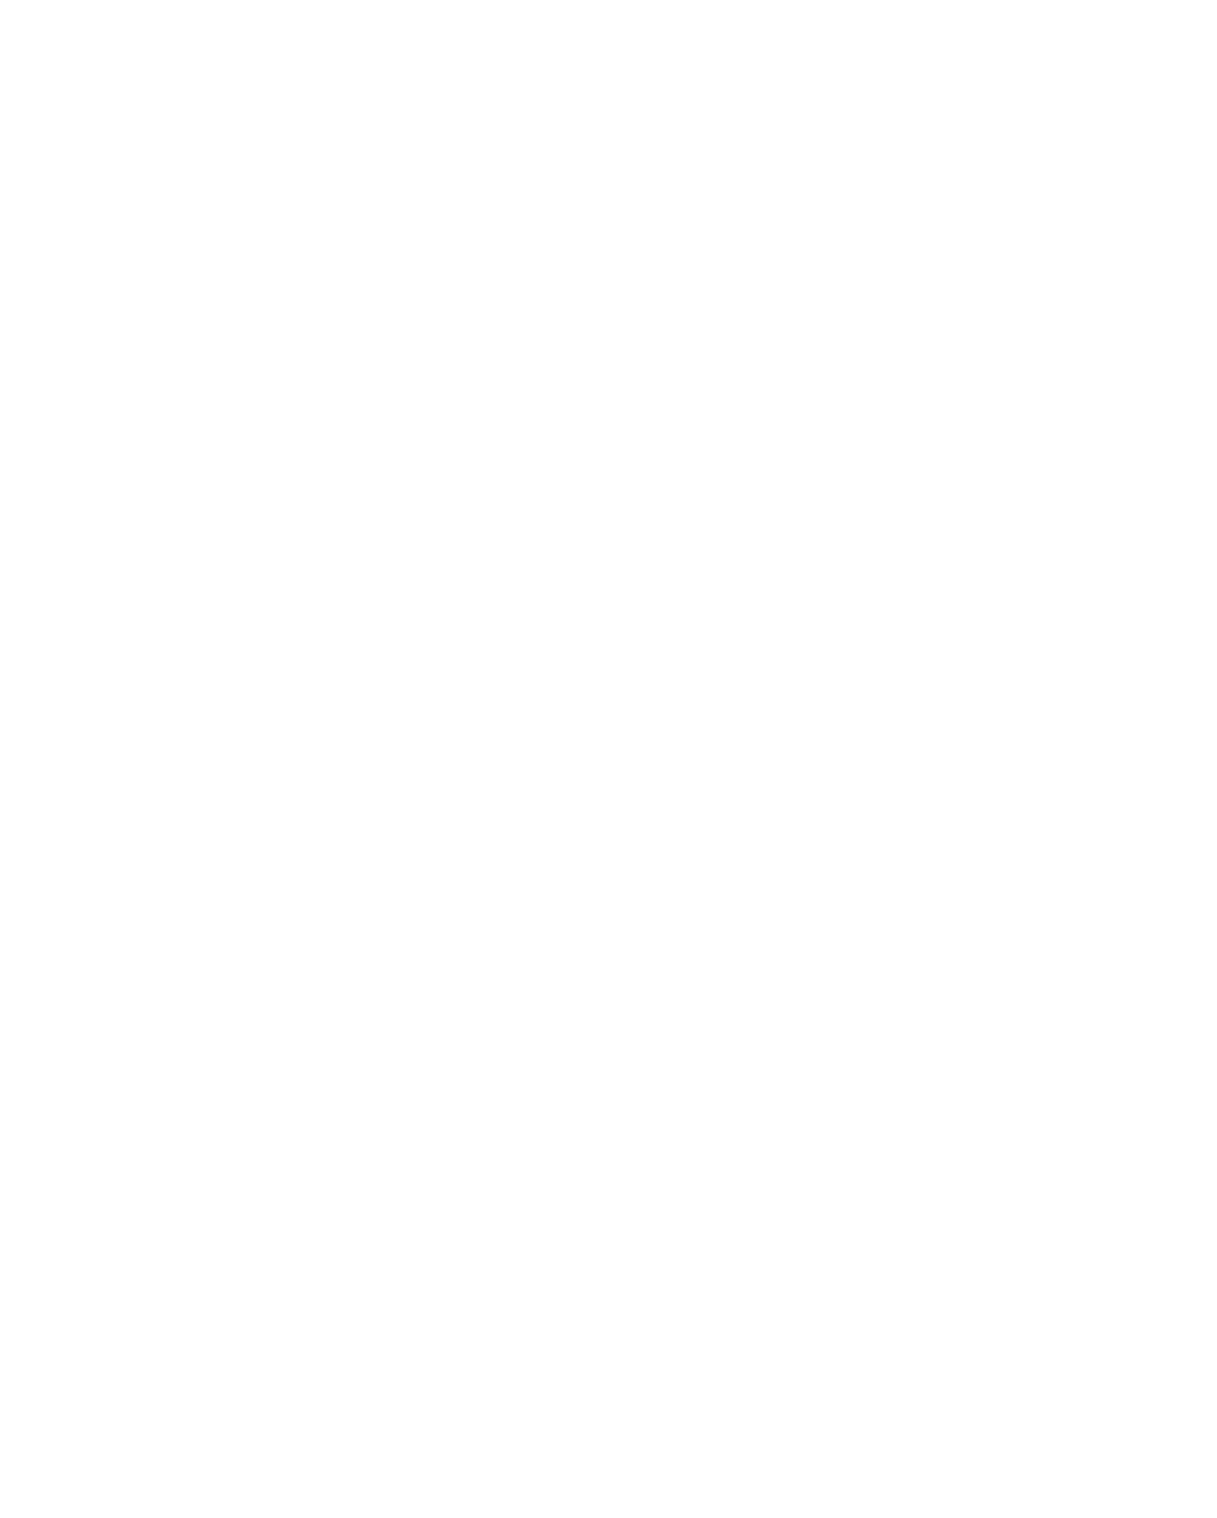 Atossa Therapeutics logo for dark backgrounds (transparent PNG)